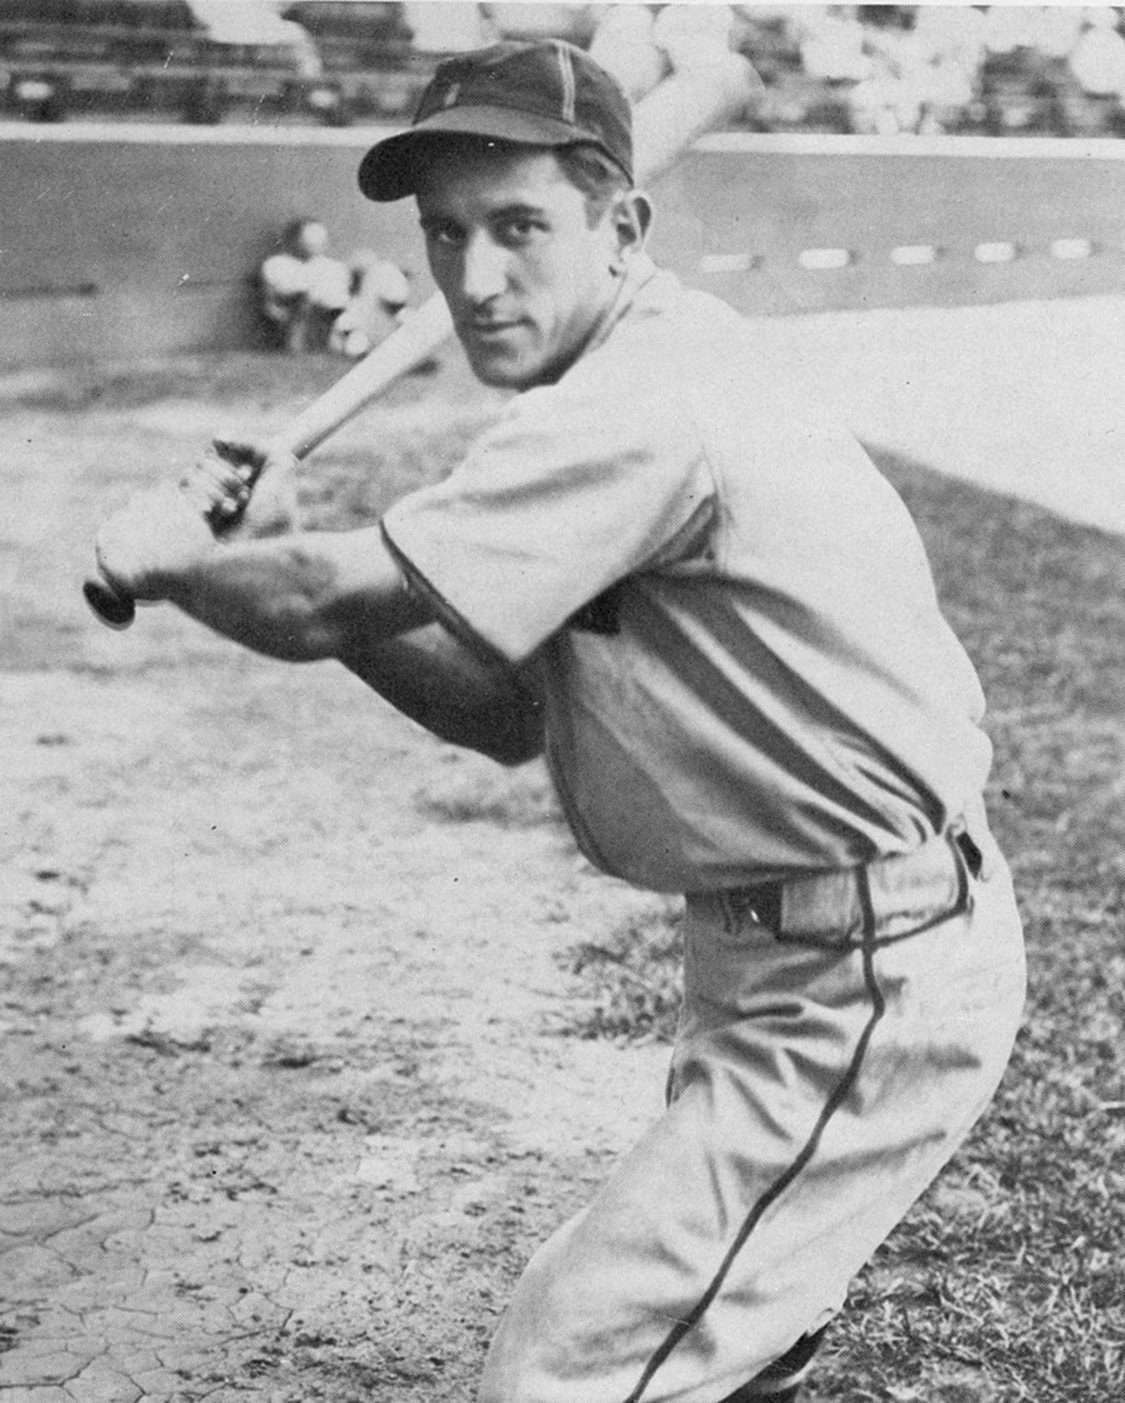 Baseball catcher Al Lopez